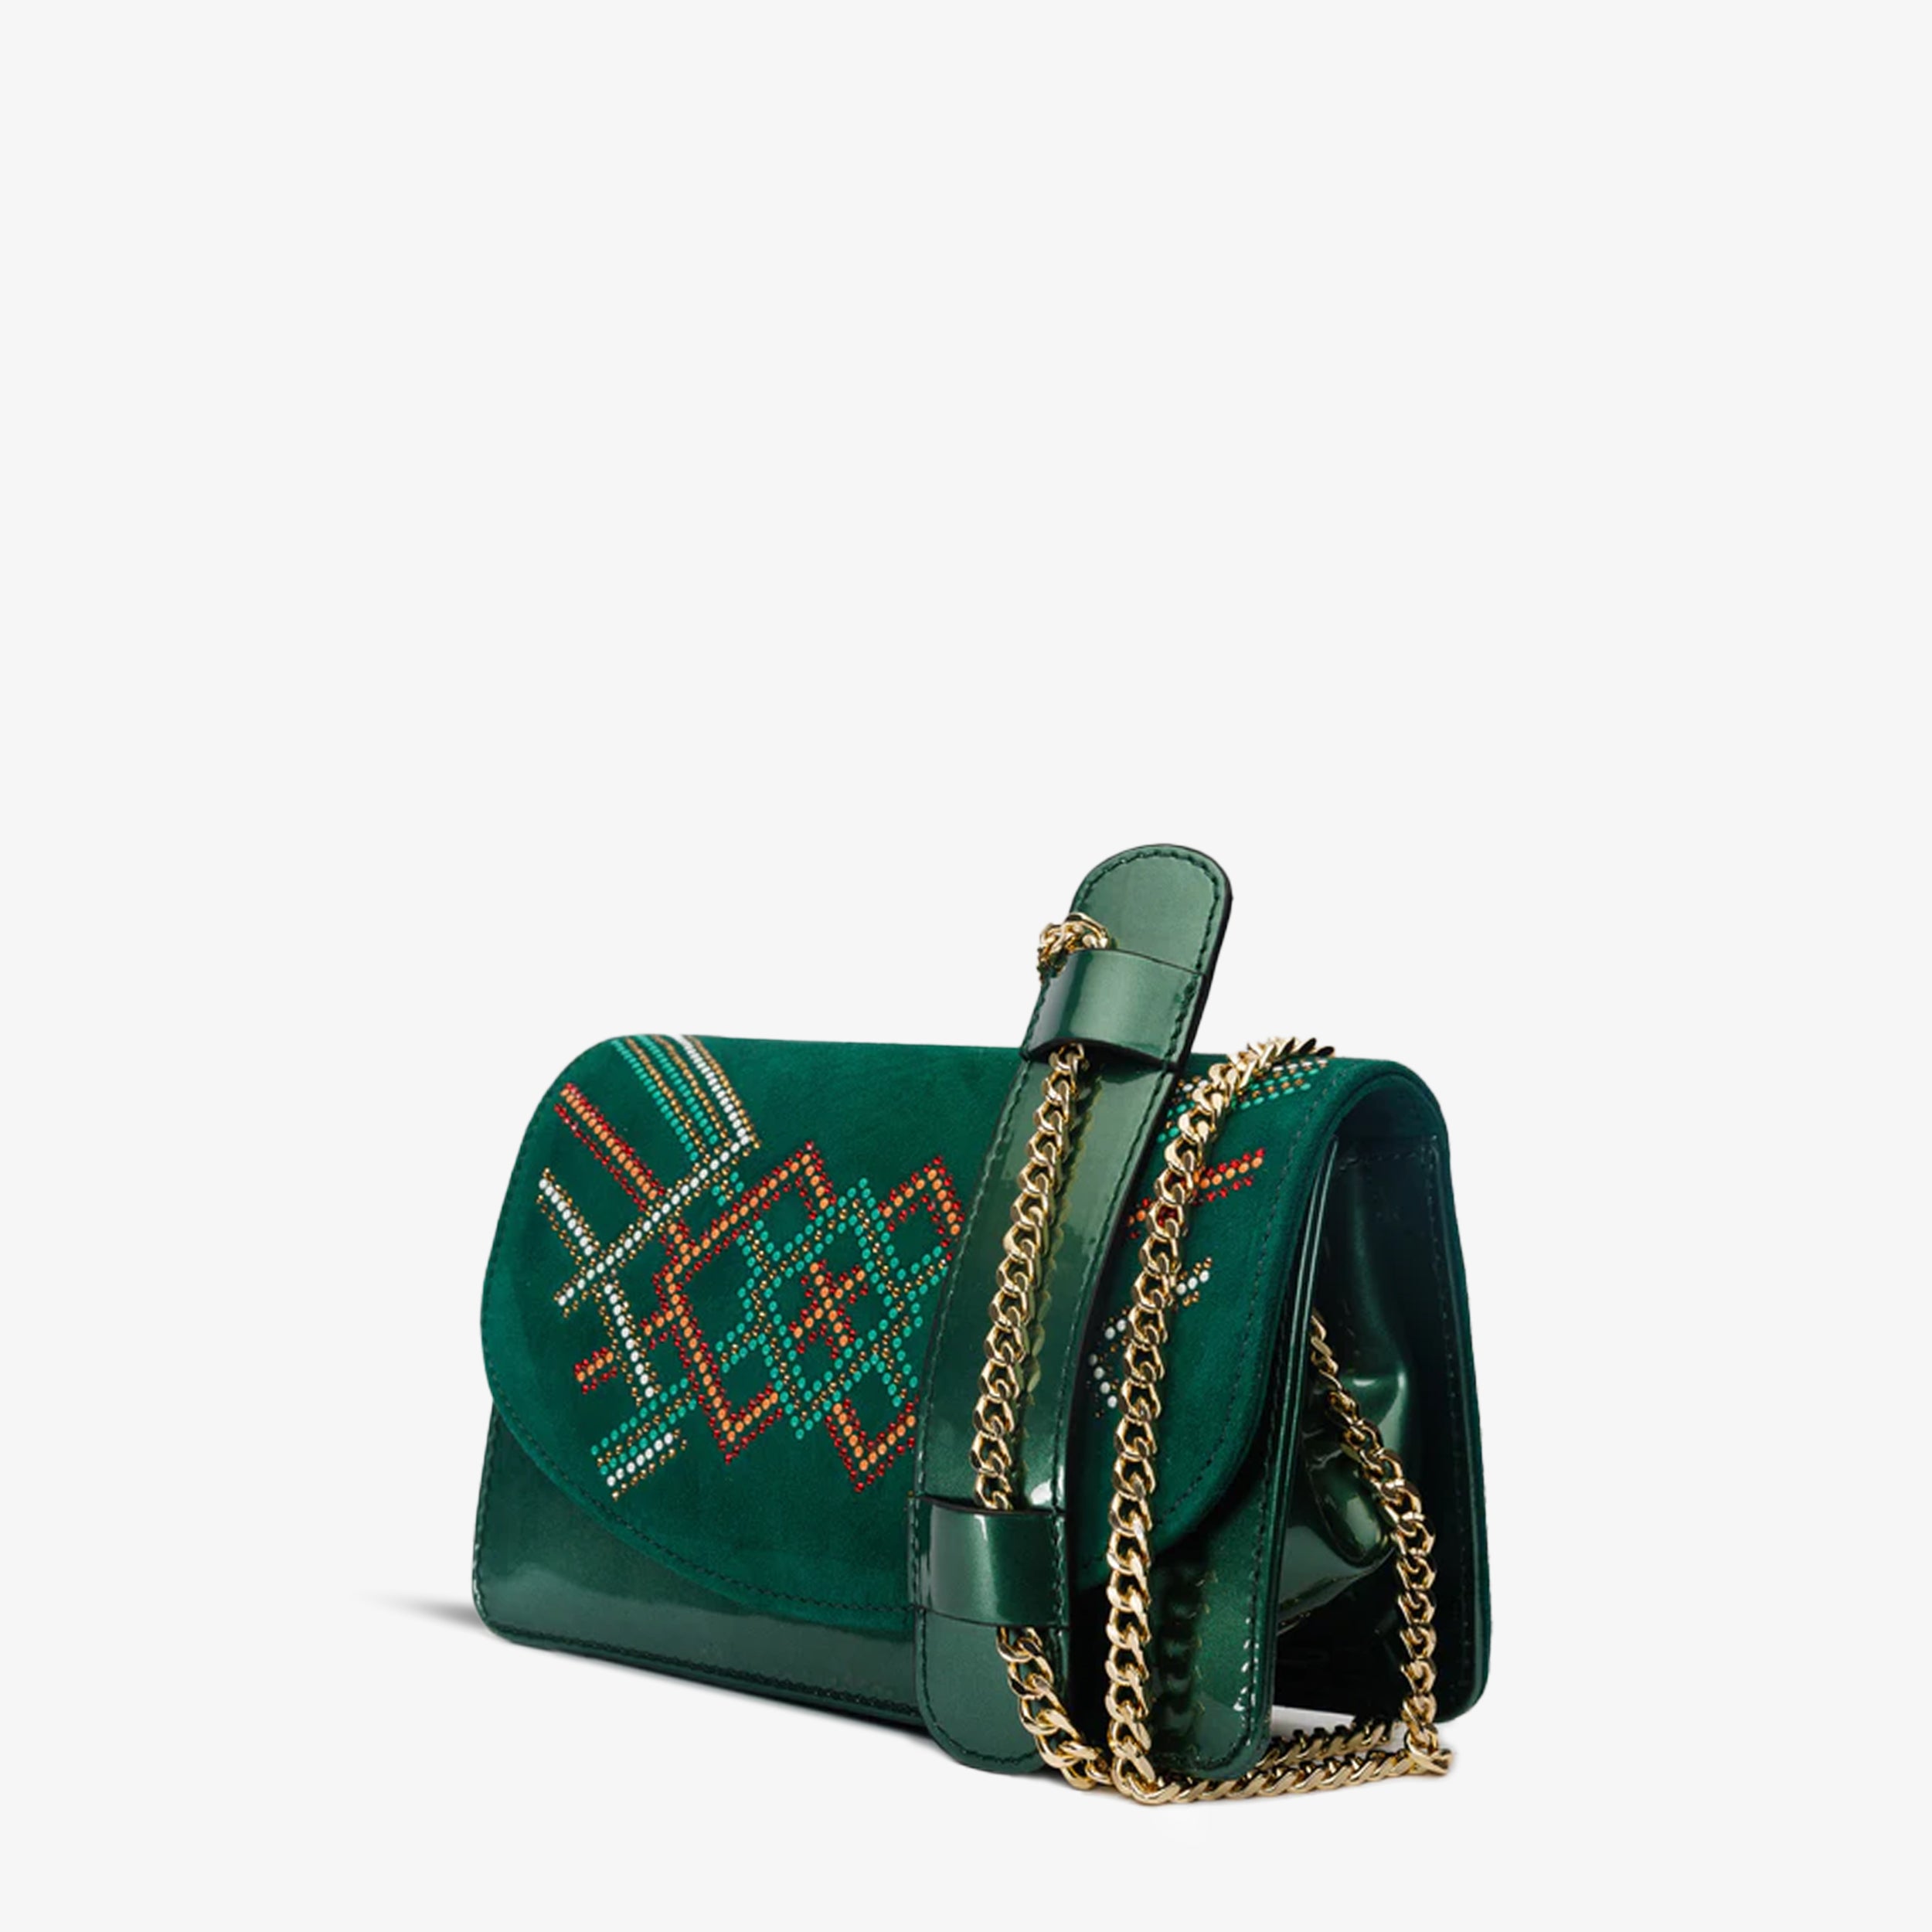 The Palma Green Glitter Leather Handbag